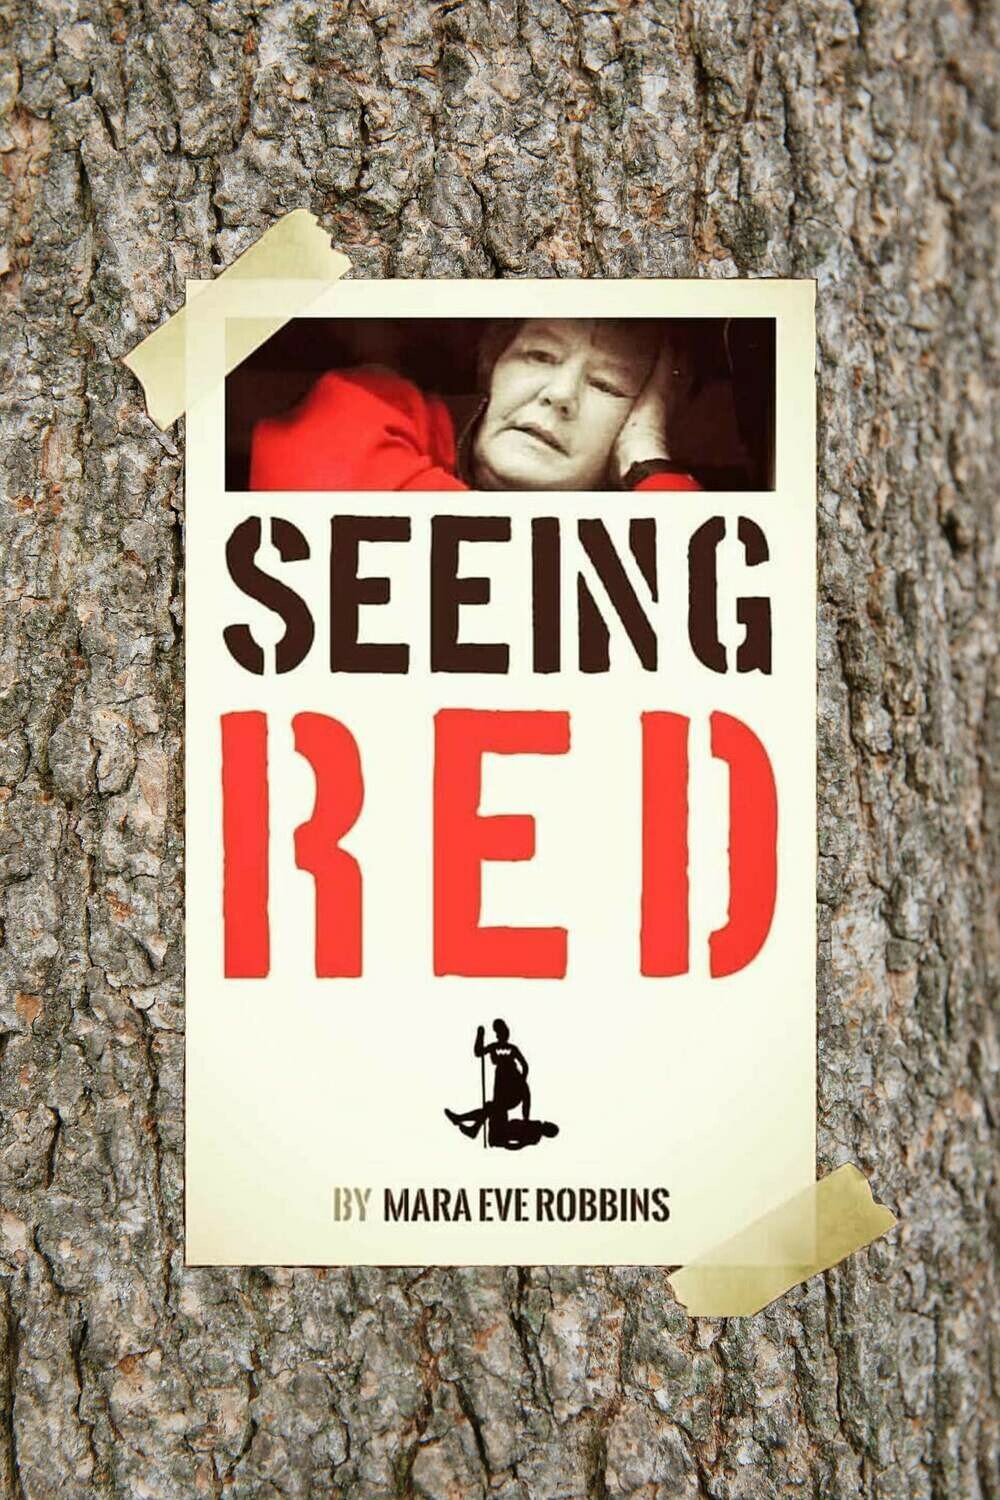 Seeing Red, by Mara Eve Robbins